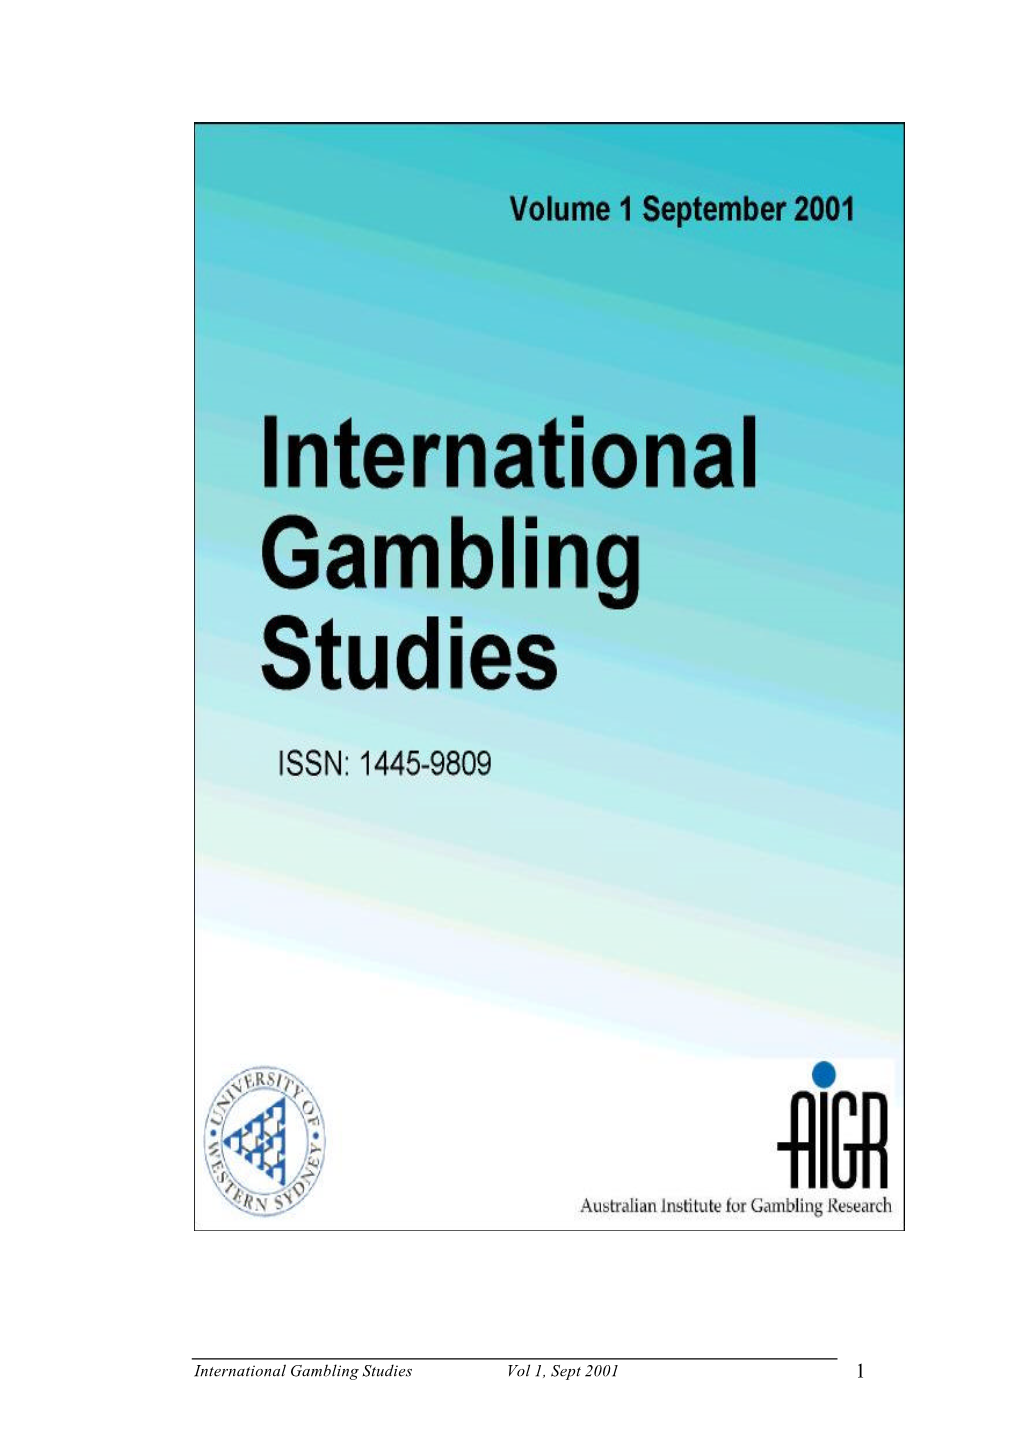 International Gambling Studies Vol 1, Sept 2001 1 Editor Jan Mcmillen, (University of Western Sydney, Australia)